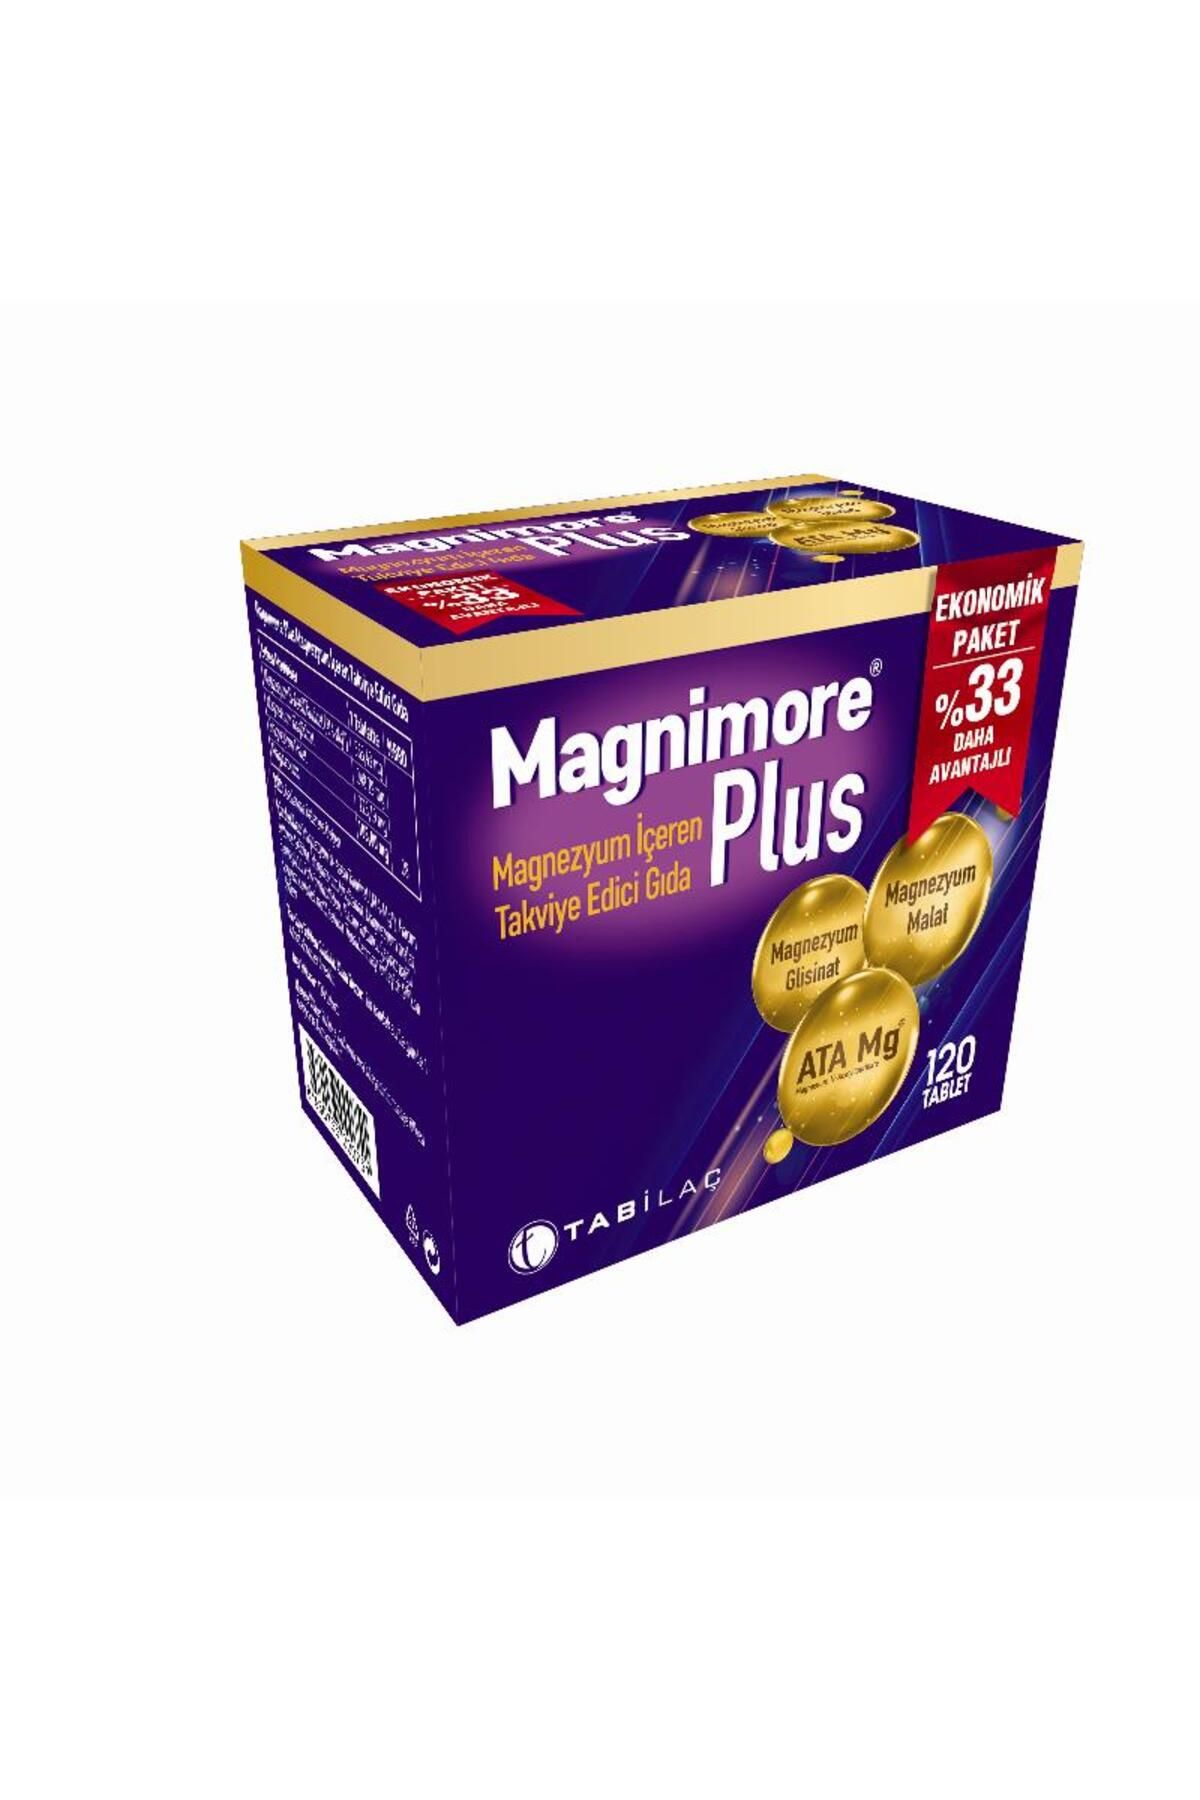 Magnimore Tab Ilaç Plus 120 Tablet Ekonomik Paket